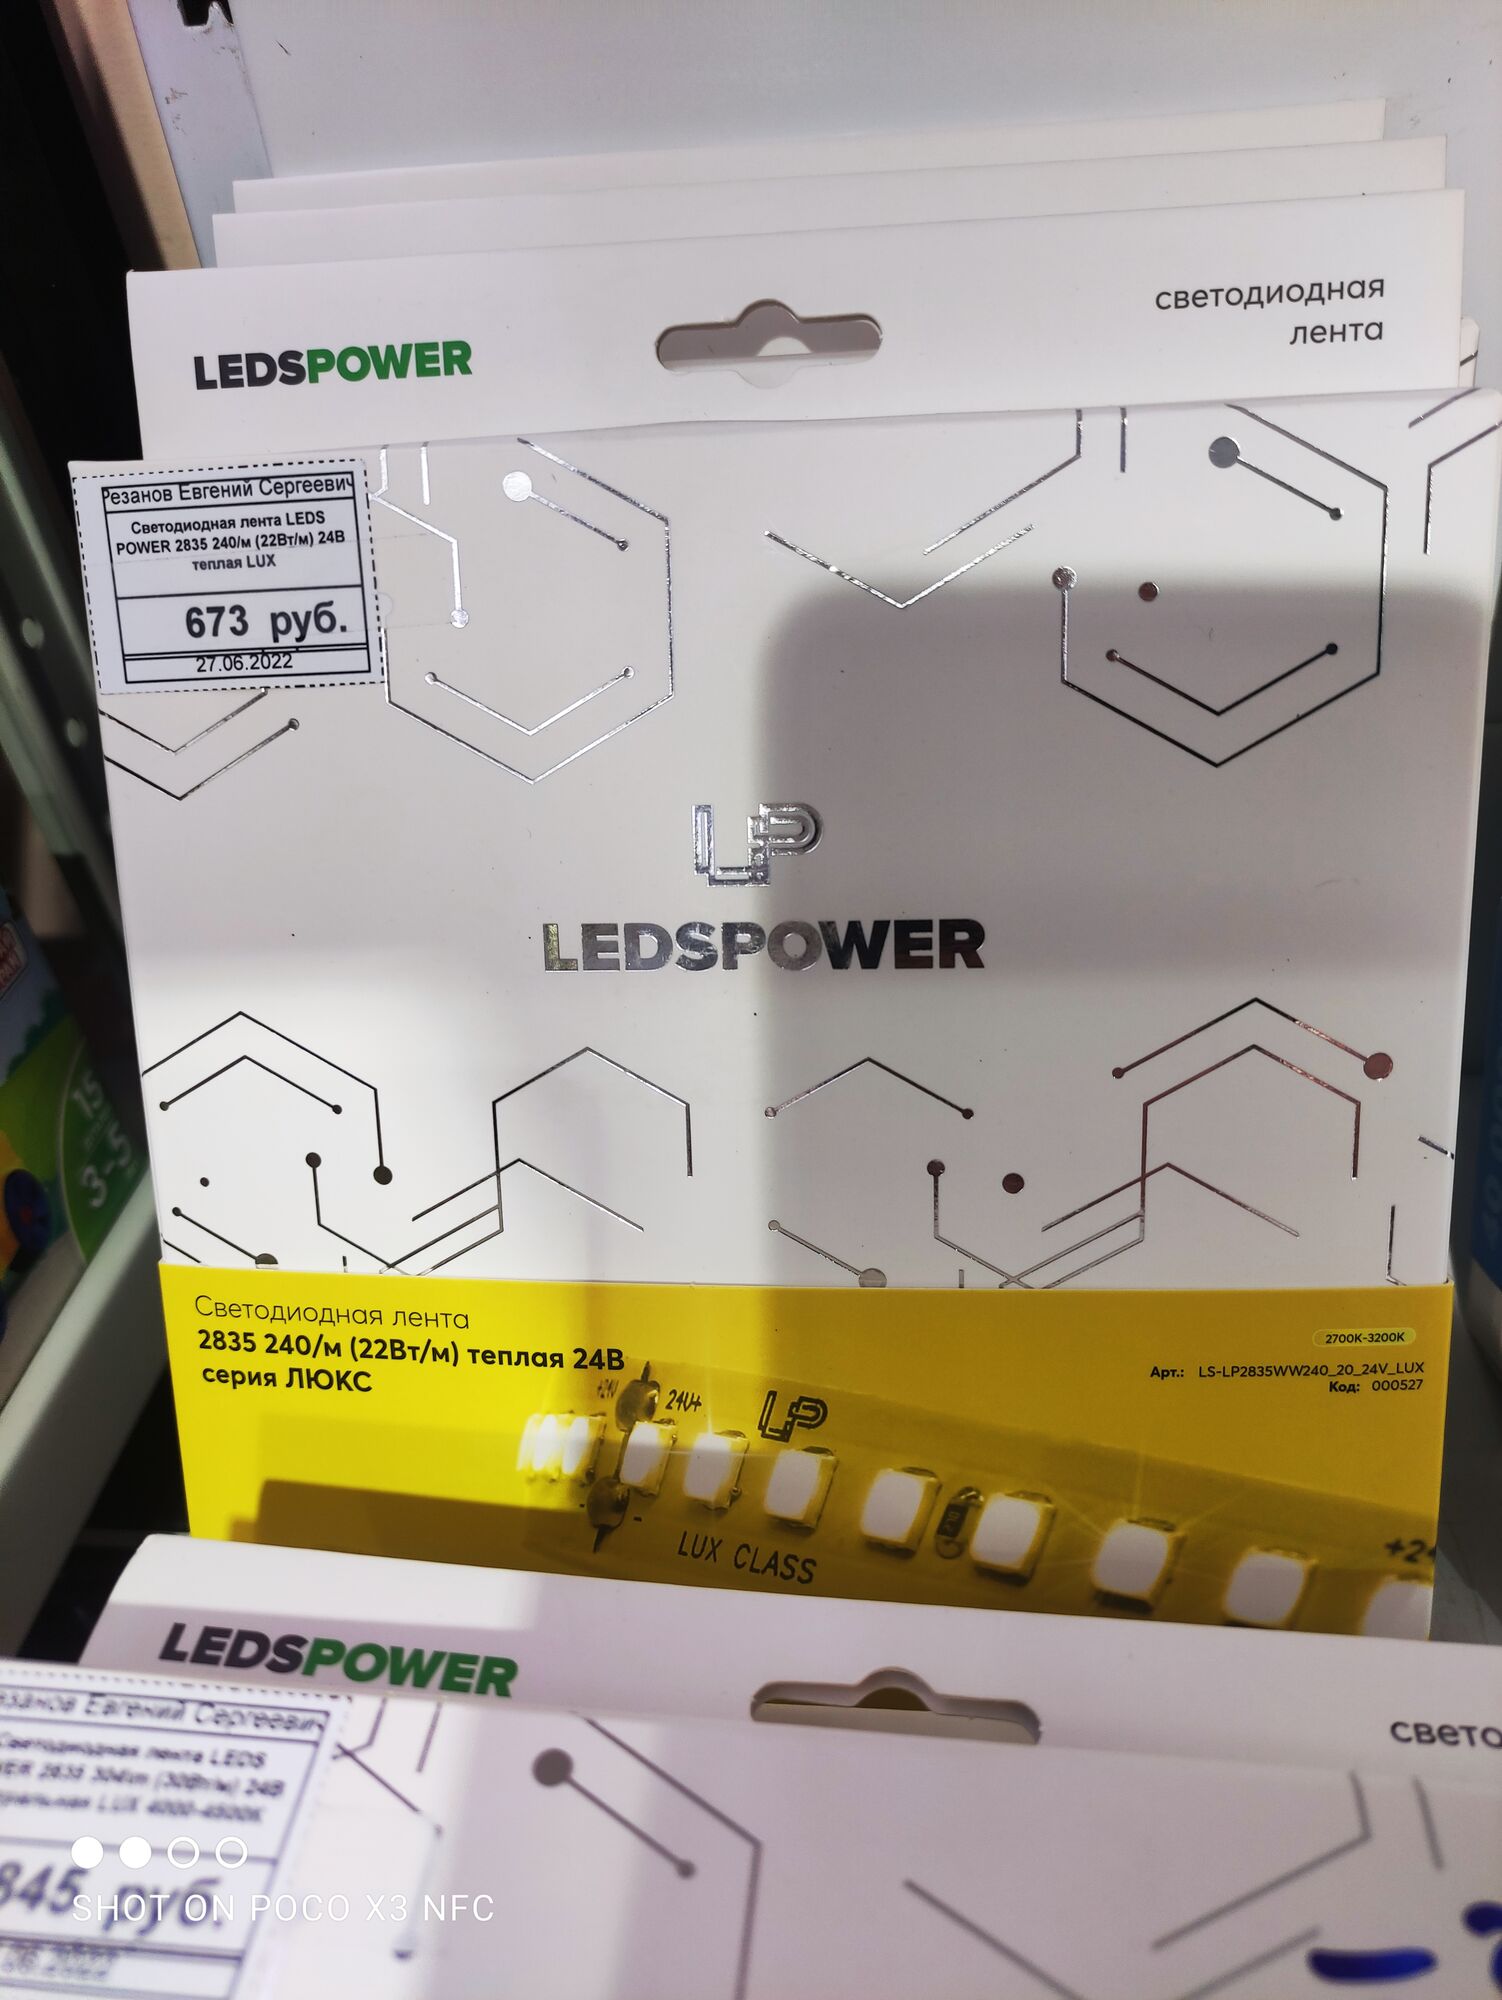 Светодиодная лента LEDS POWER 2835 240/м (22Вт/м) 24В теплая LUX